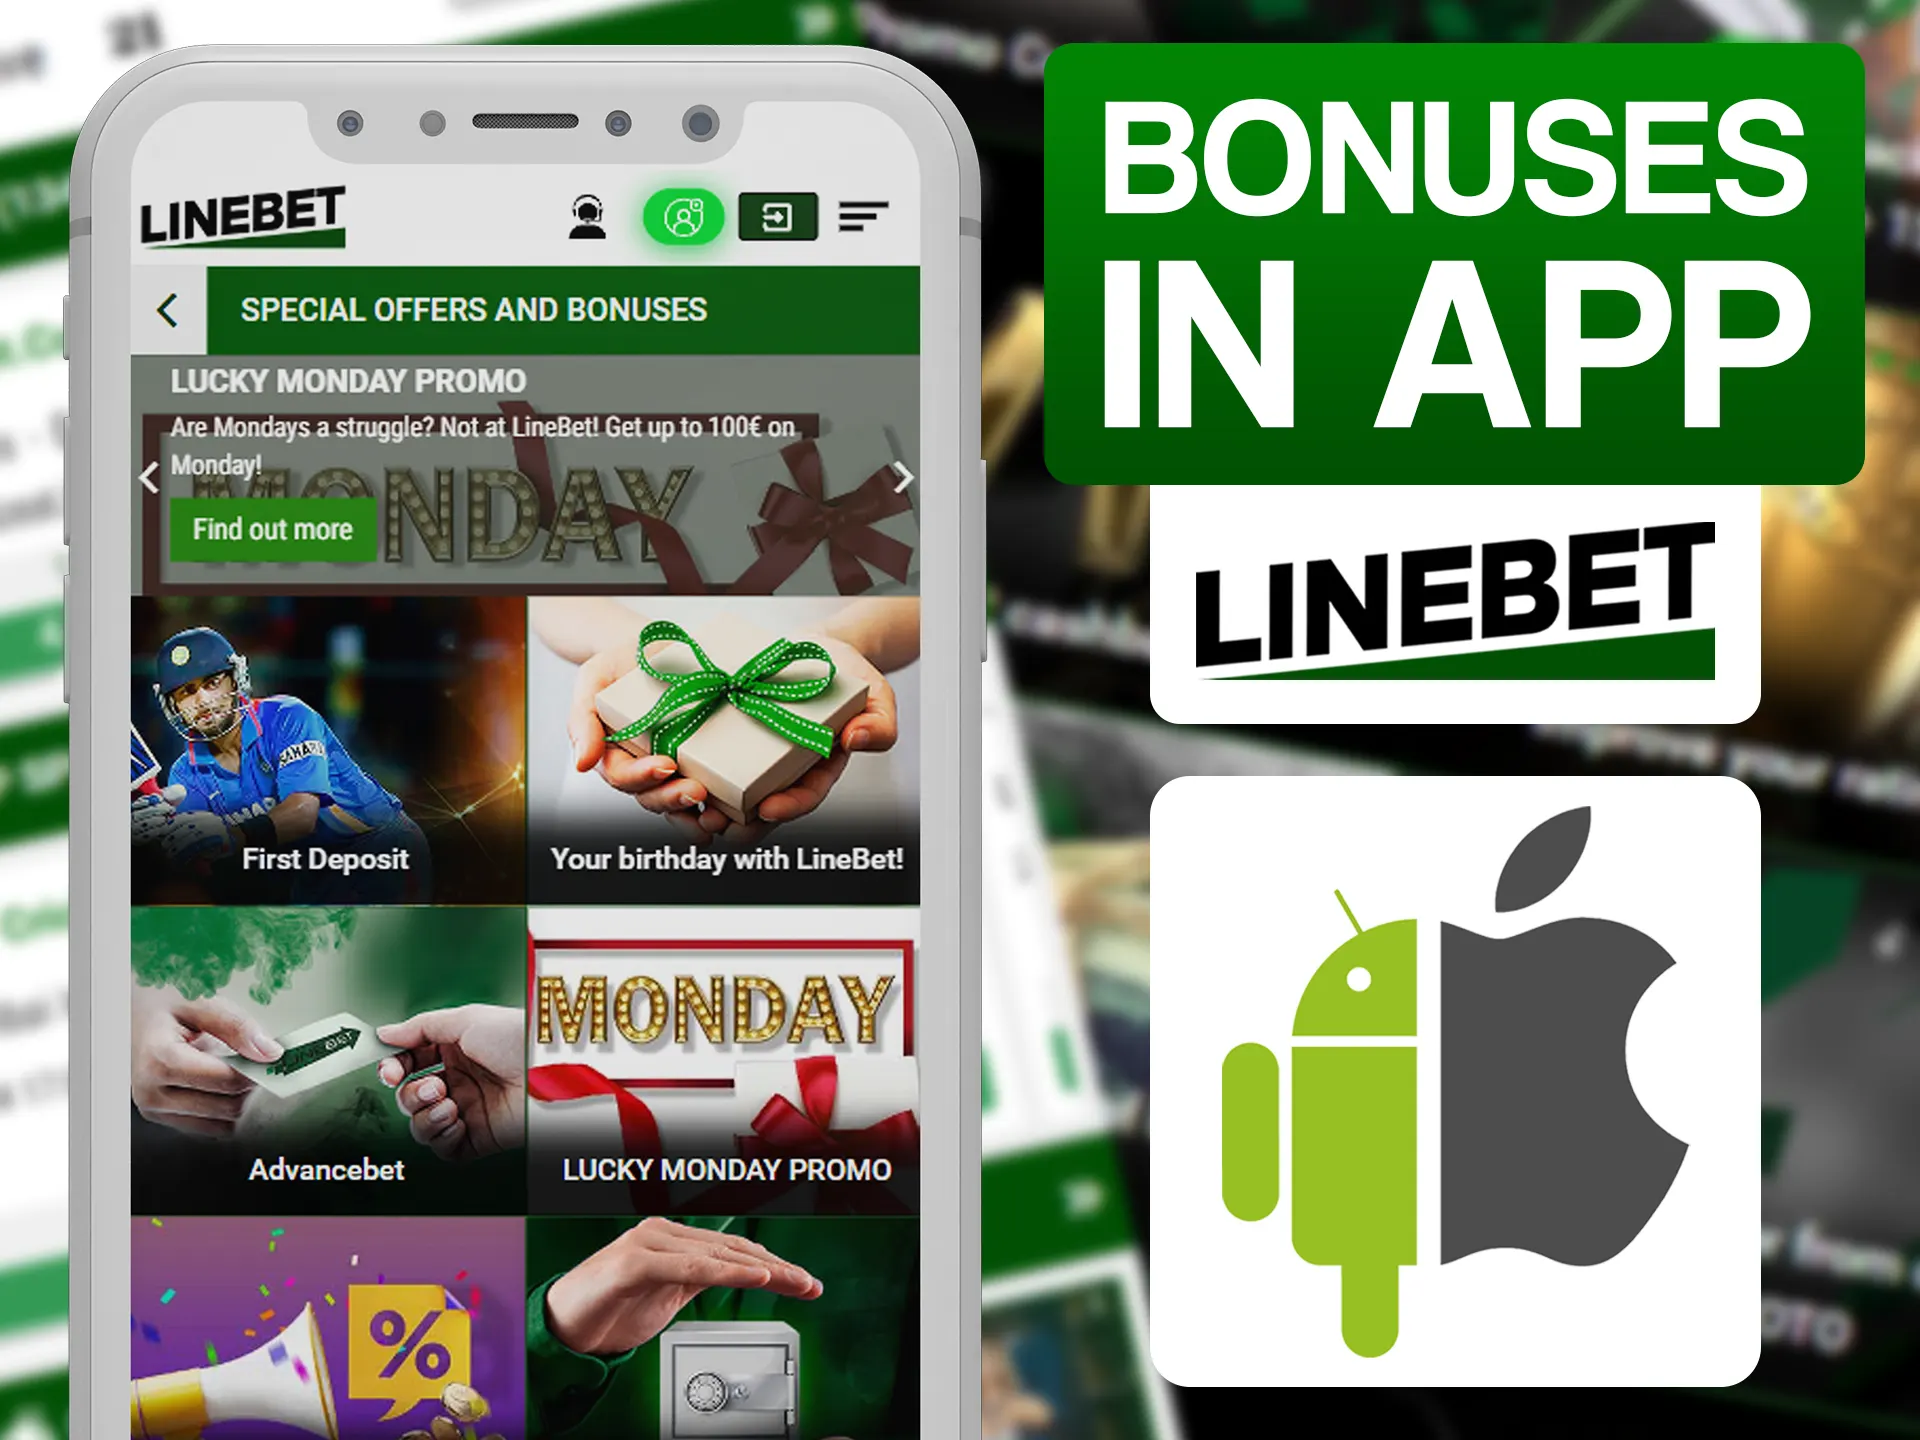 Get your bonus quicker using the Linebet app.